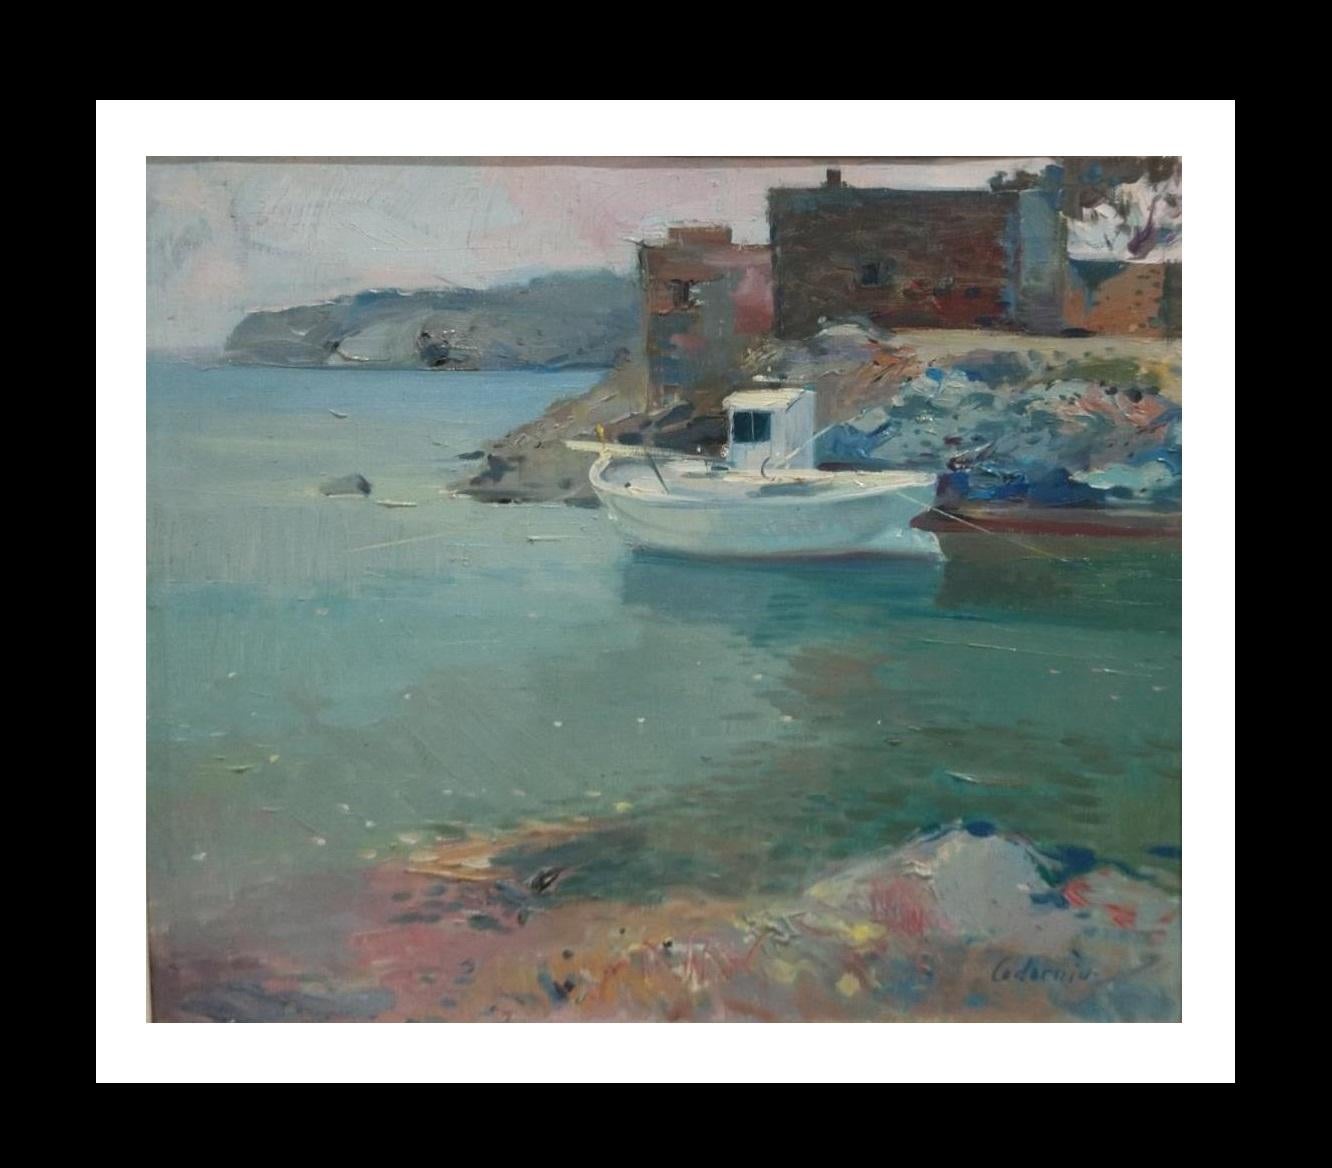  Codorniu  34  Majorca   expressionist acrylic painting - Painting by Daniel Codorniu